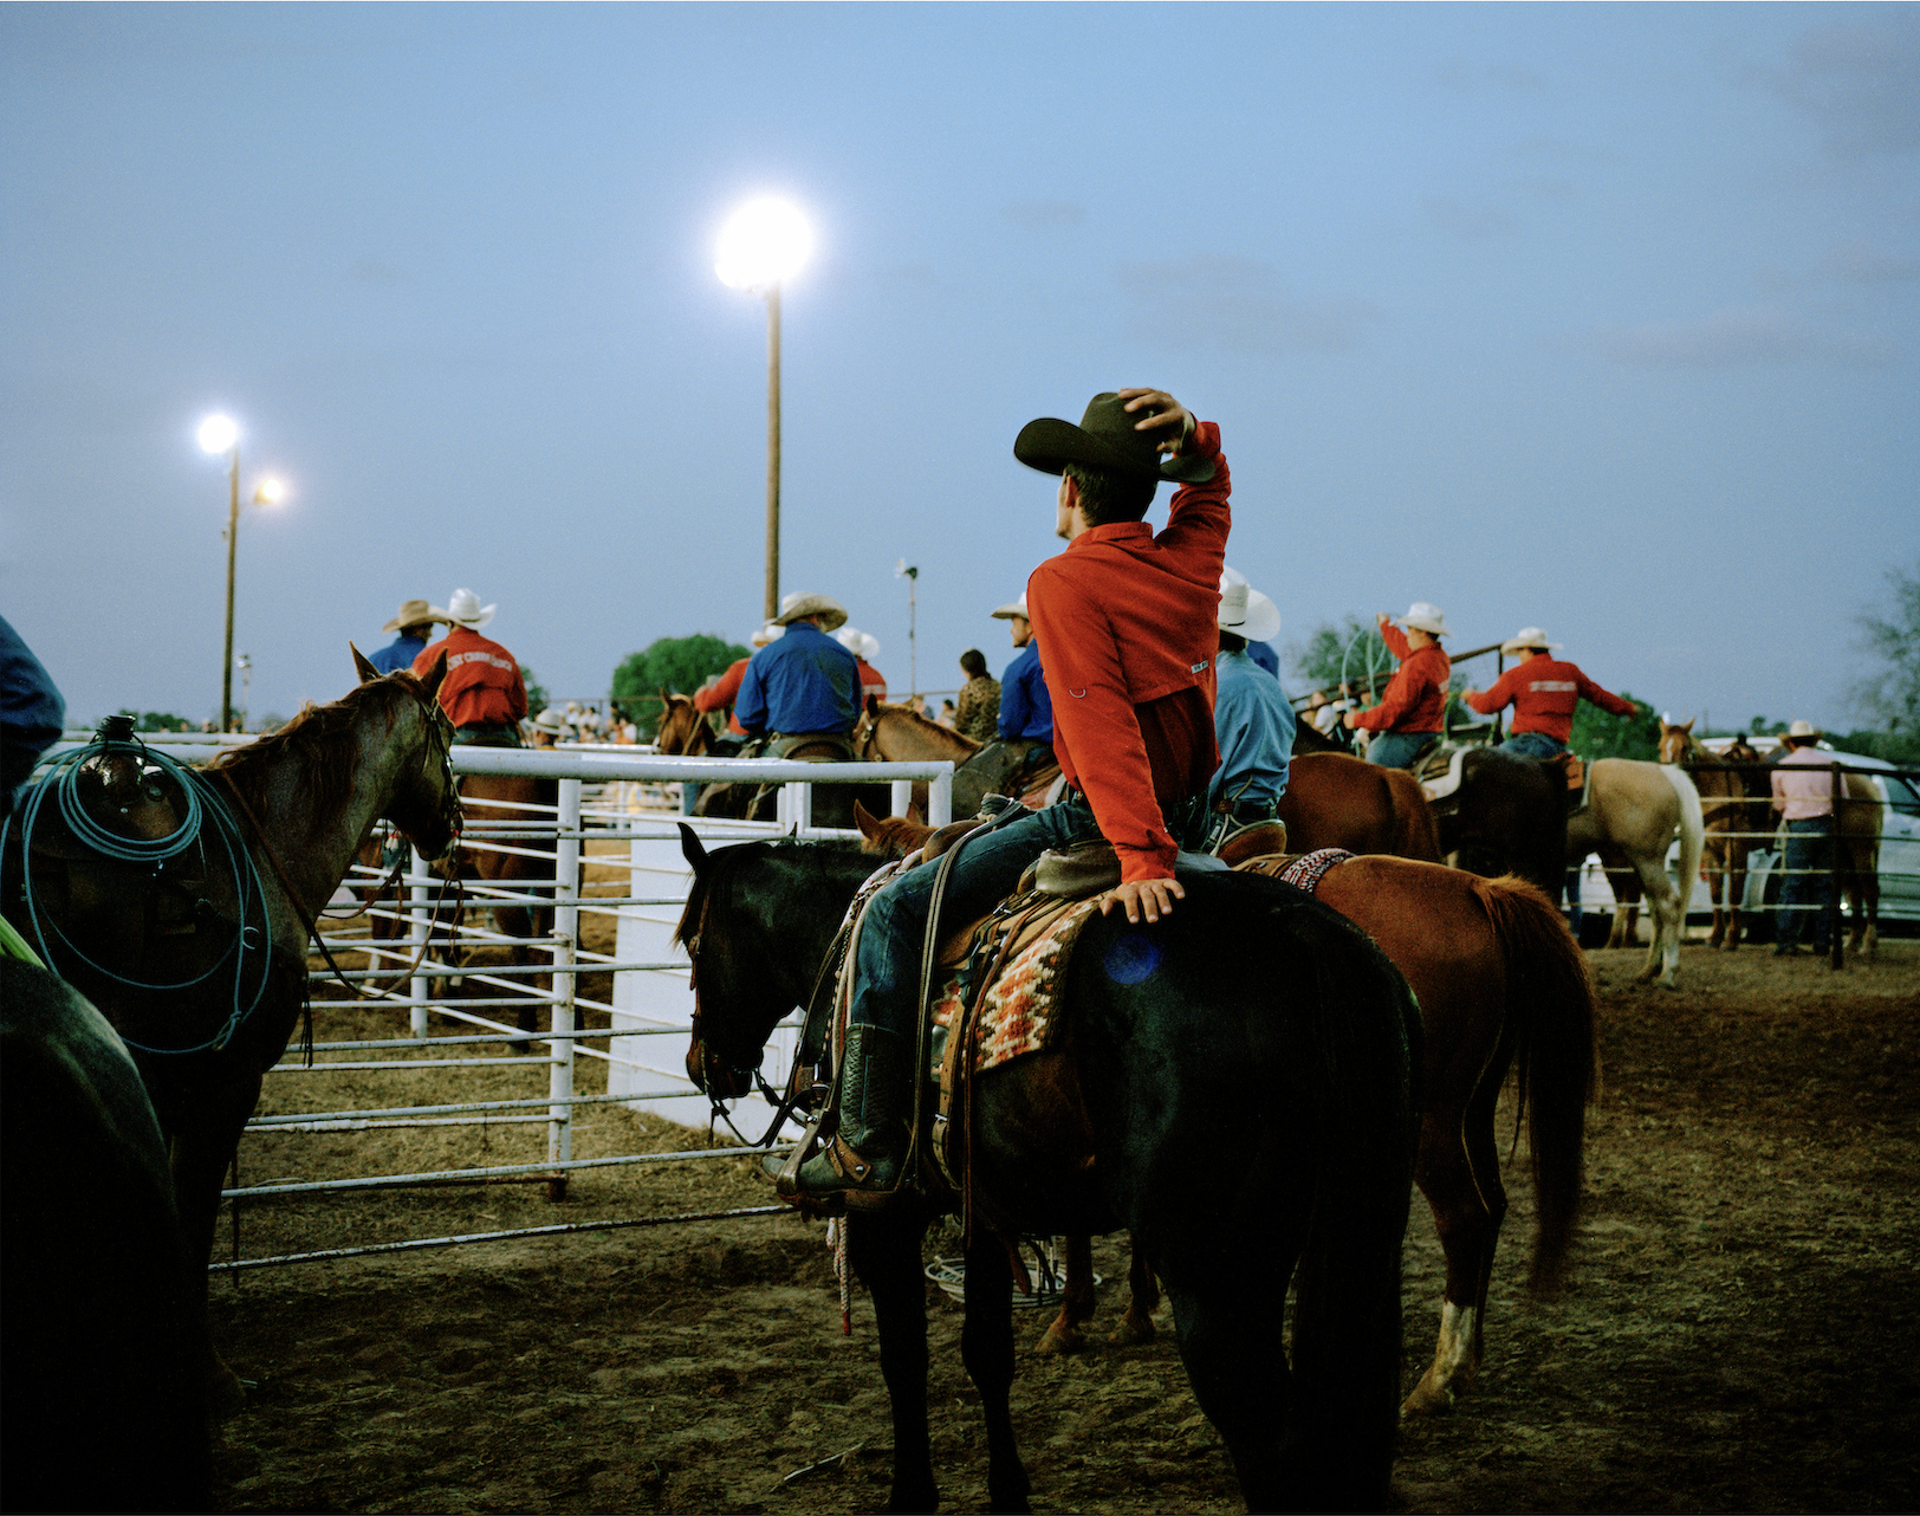 Rodeo Night by Ben Sklar